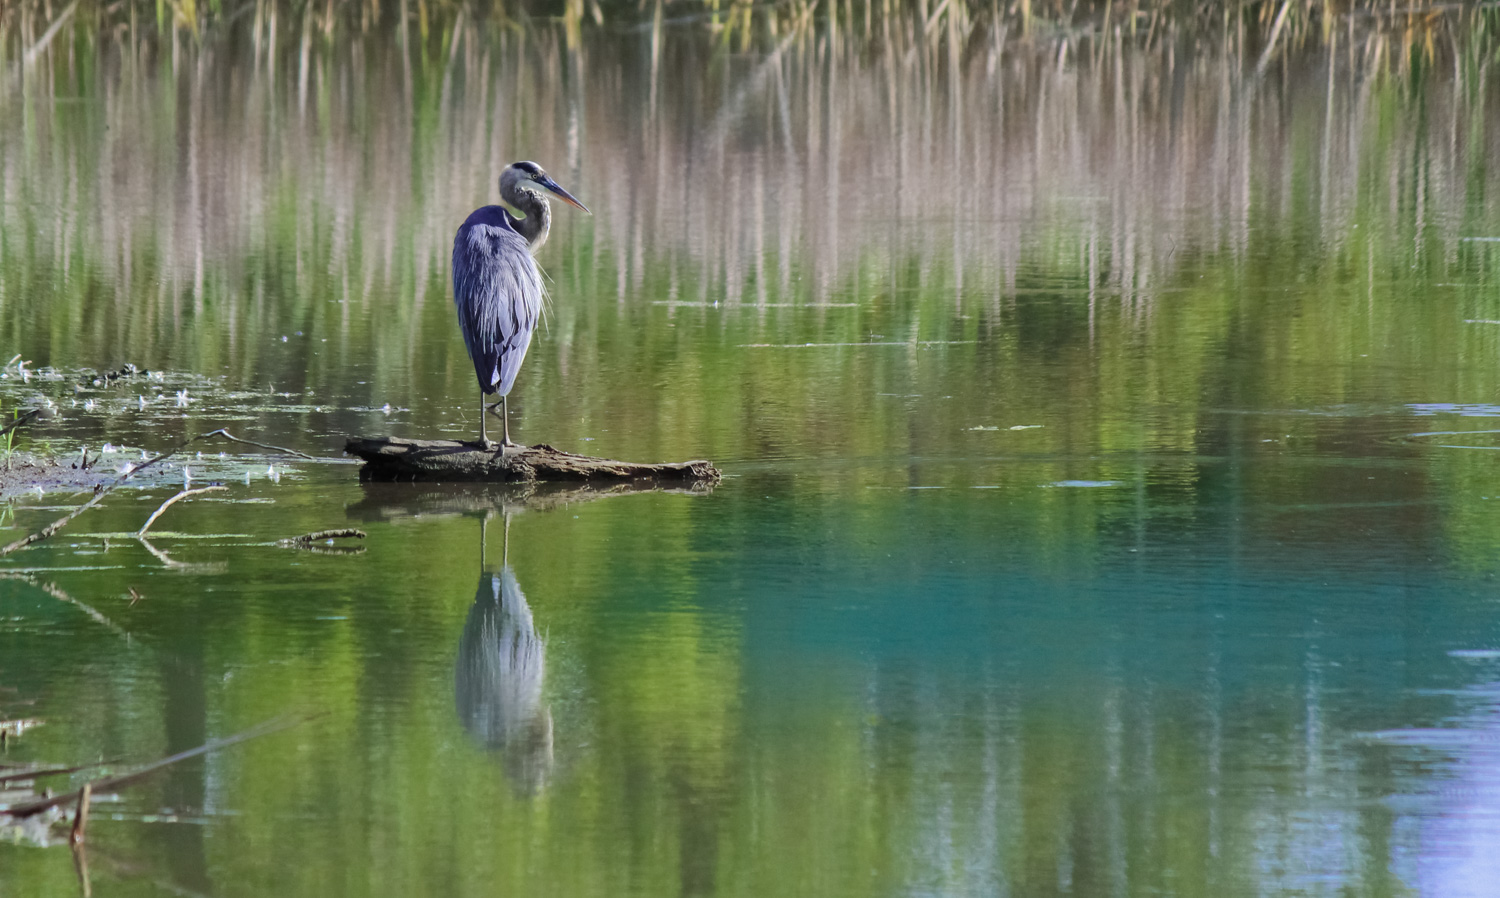  Heron Reflection 